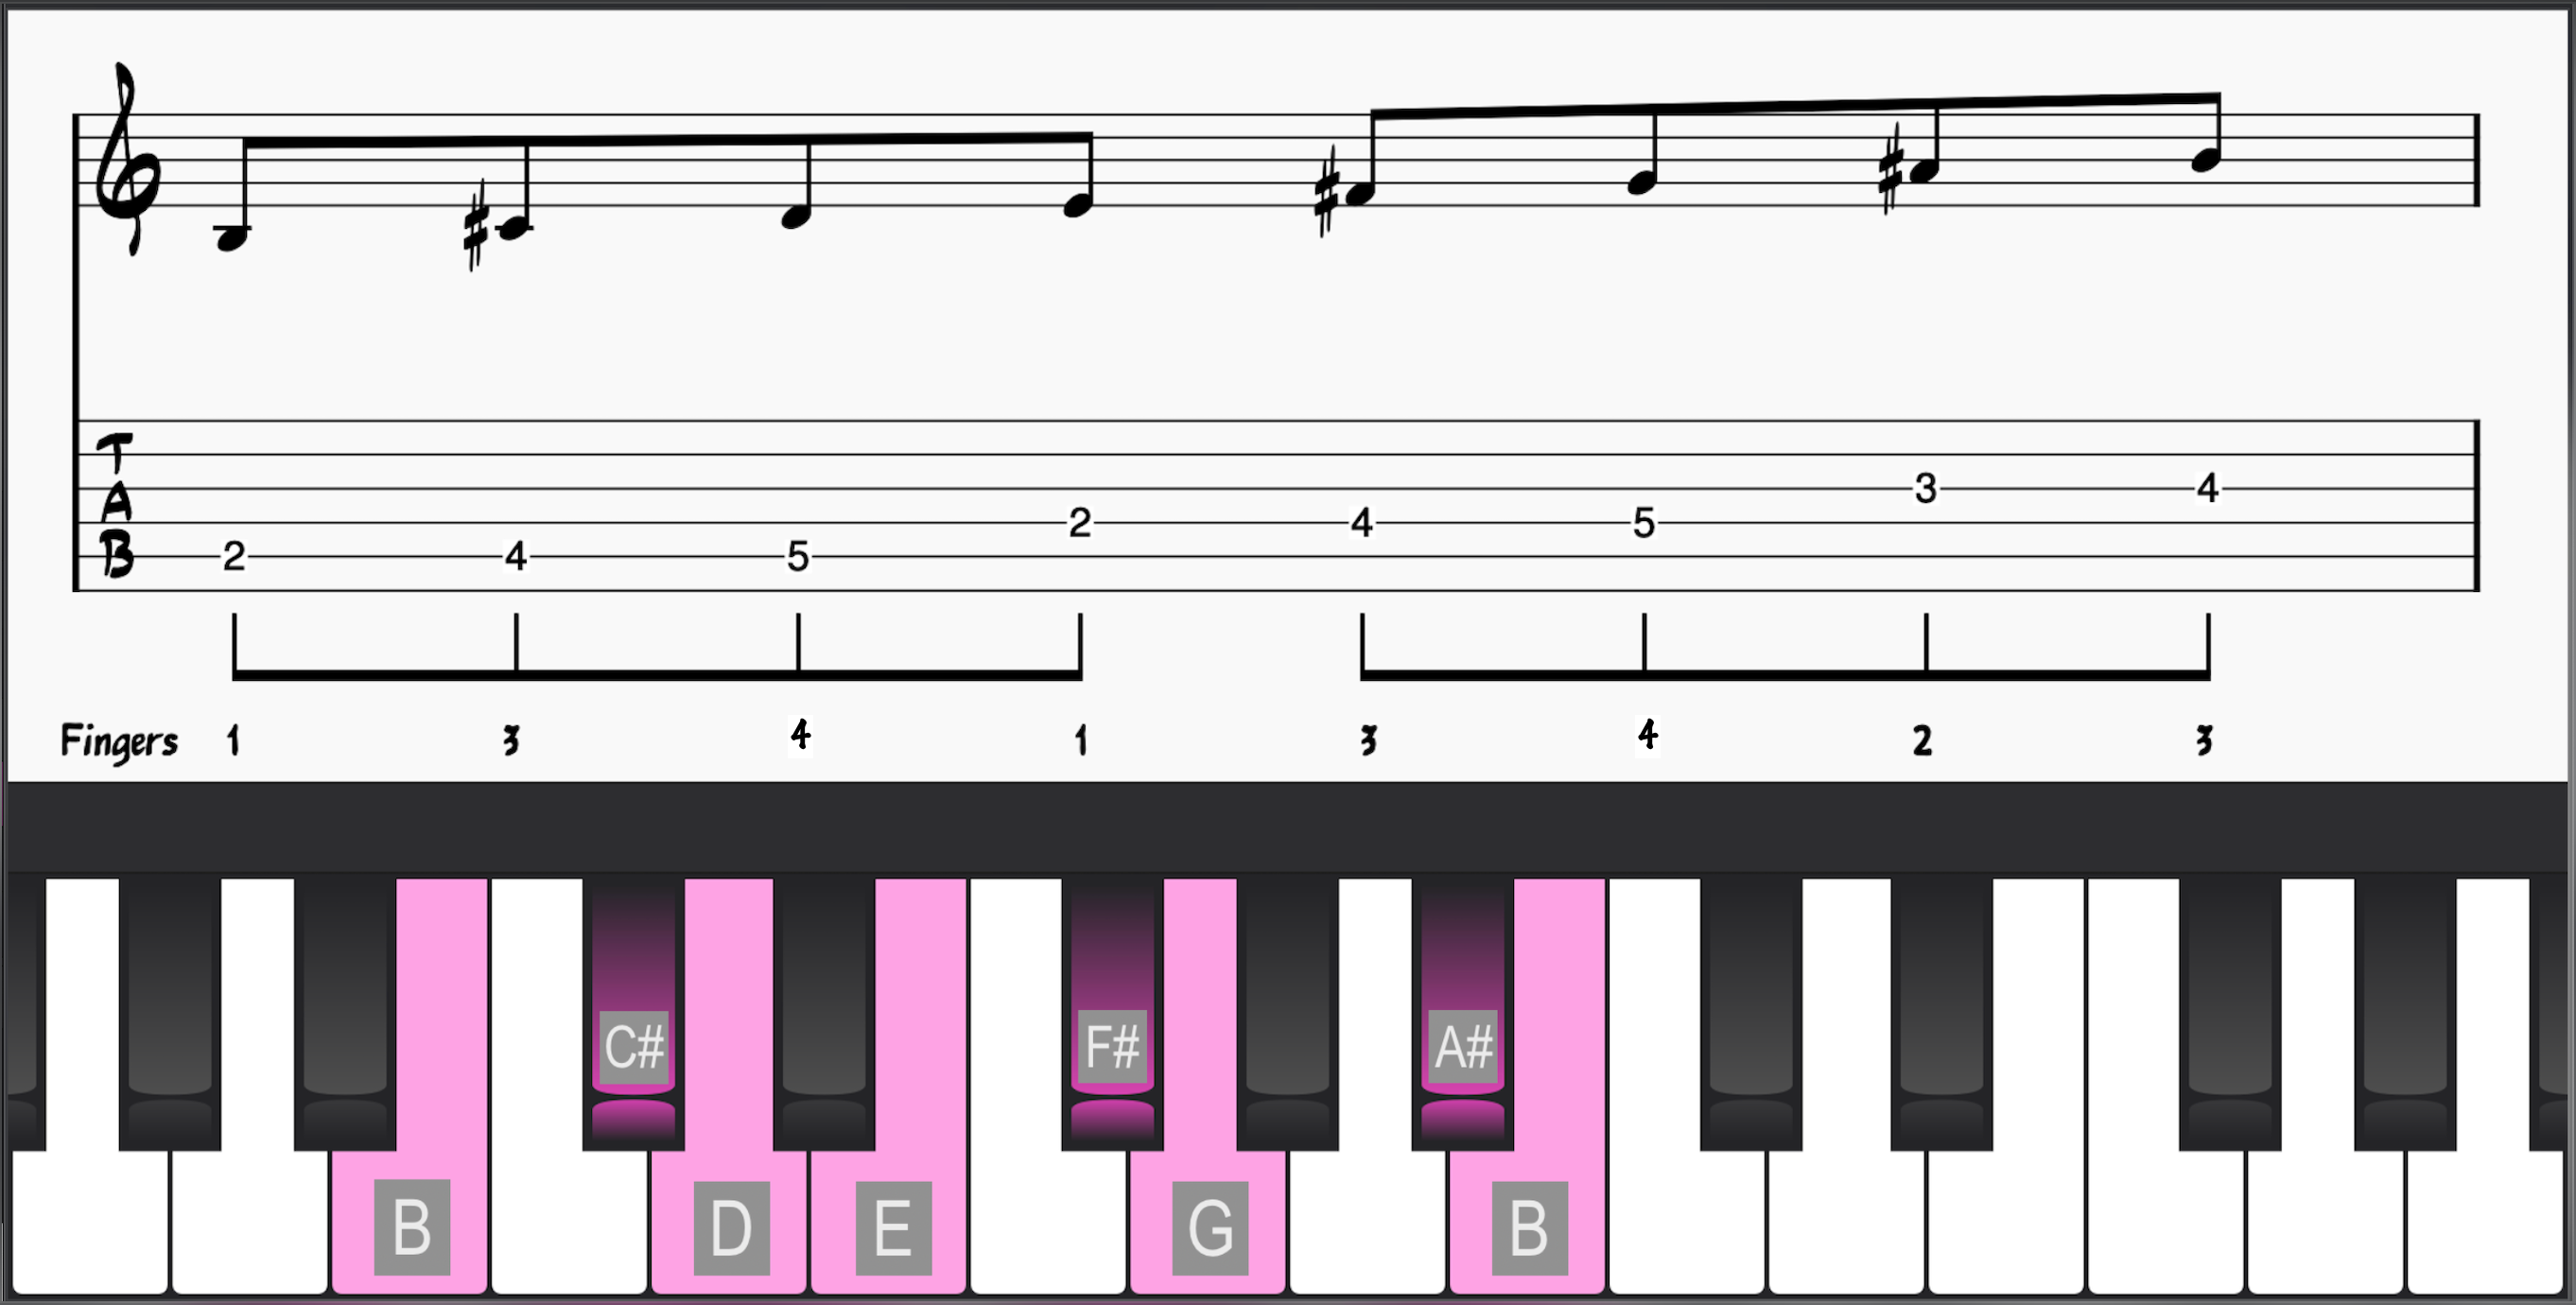 B Harmonic Minor Scale on Piano and Guitar